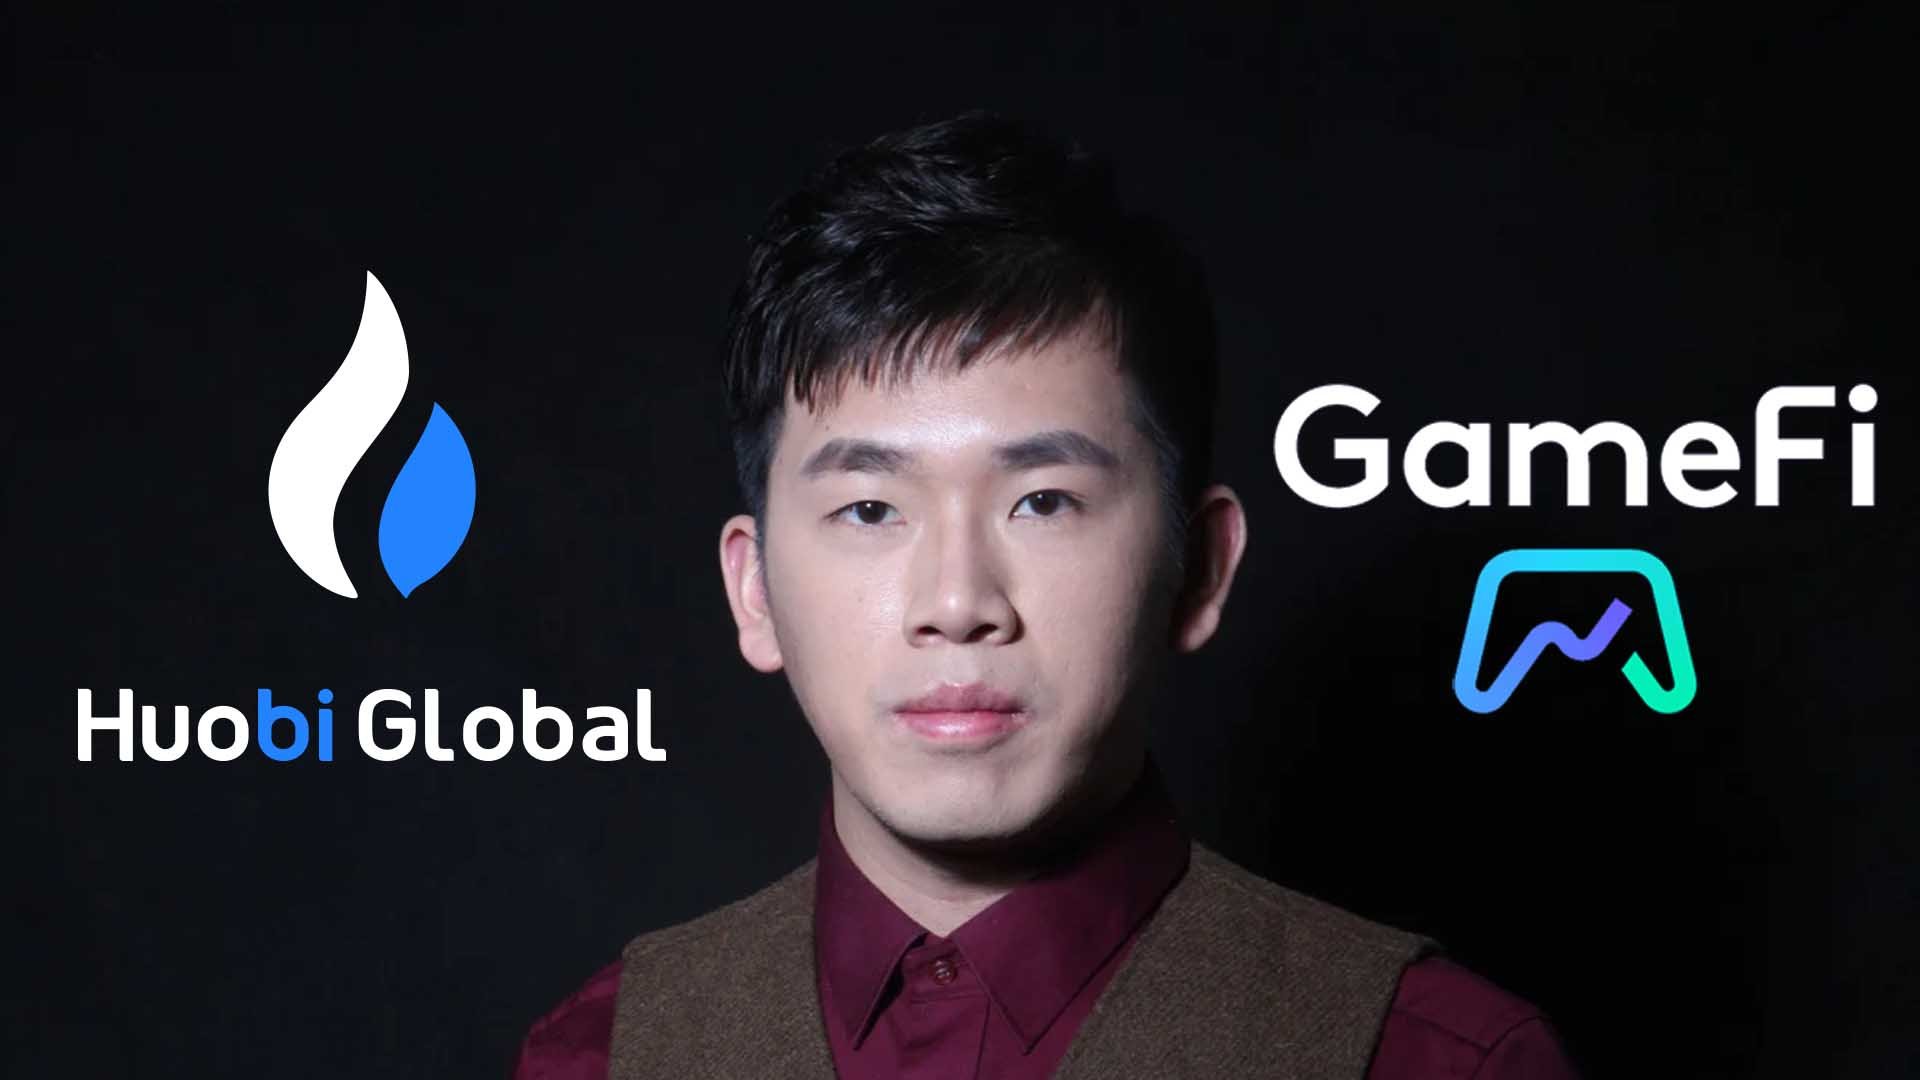 Huobi Global's Old CEO Jumps to GameFi